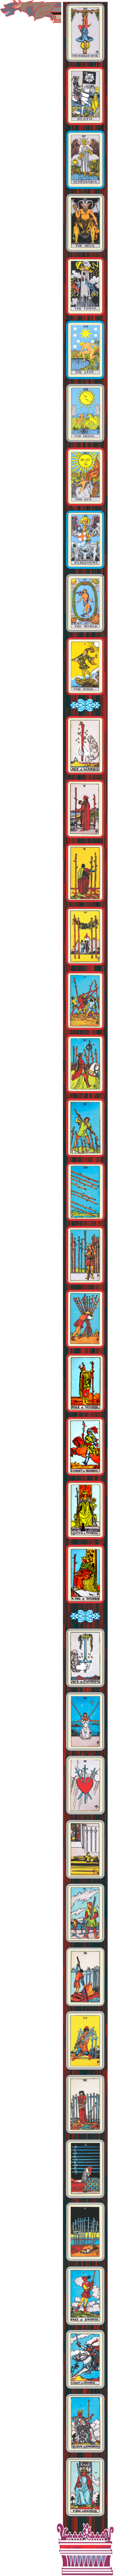 Frame Graphic-Right Gargoyle and Tarot Card Column